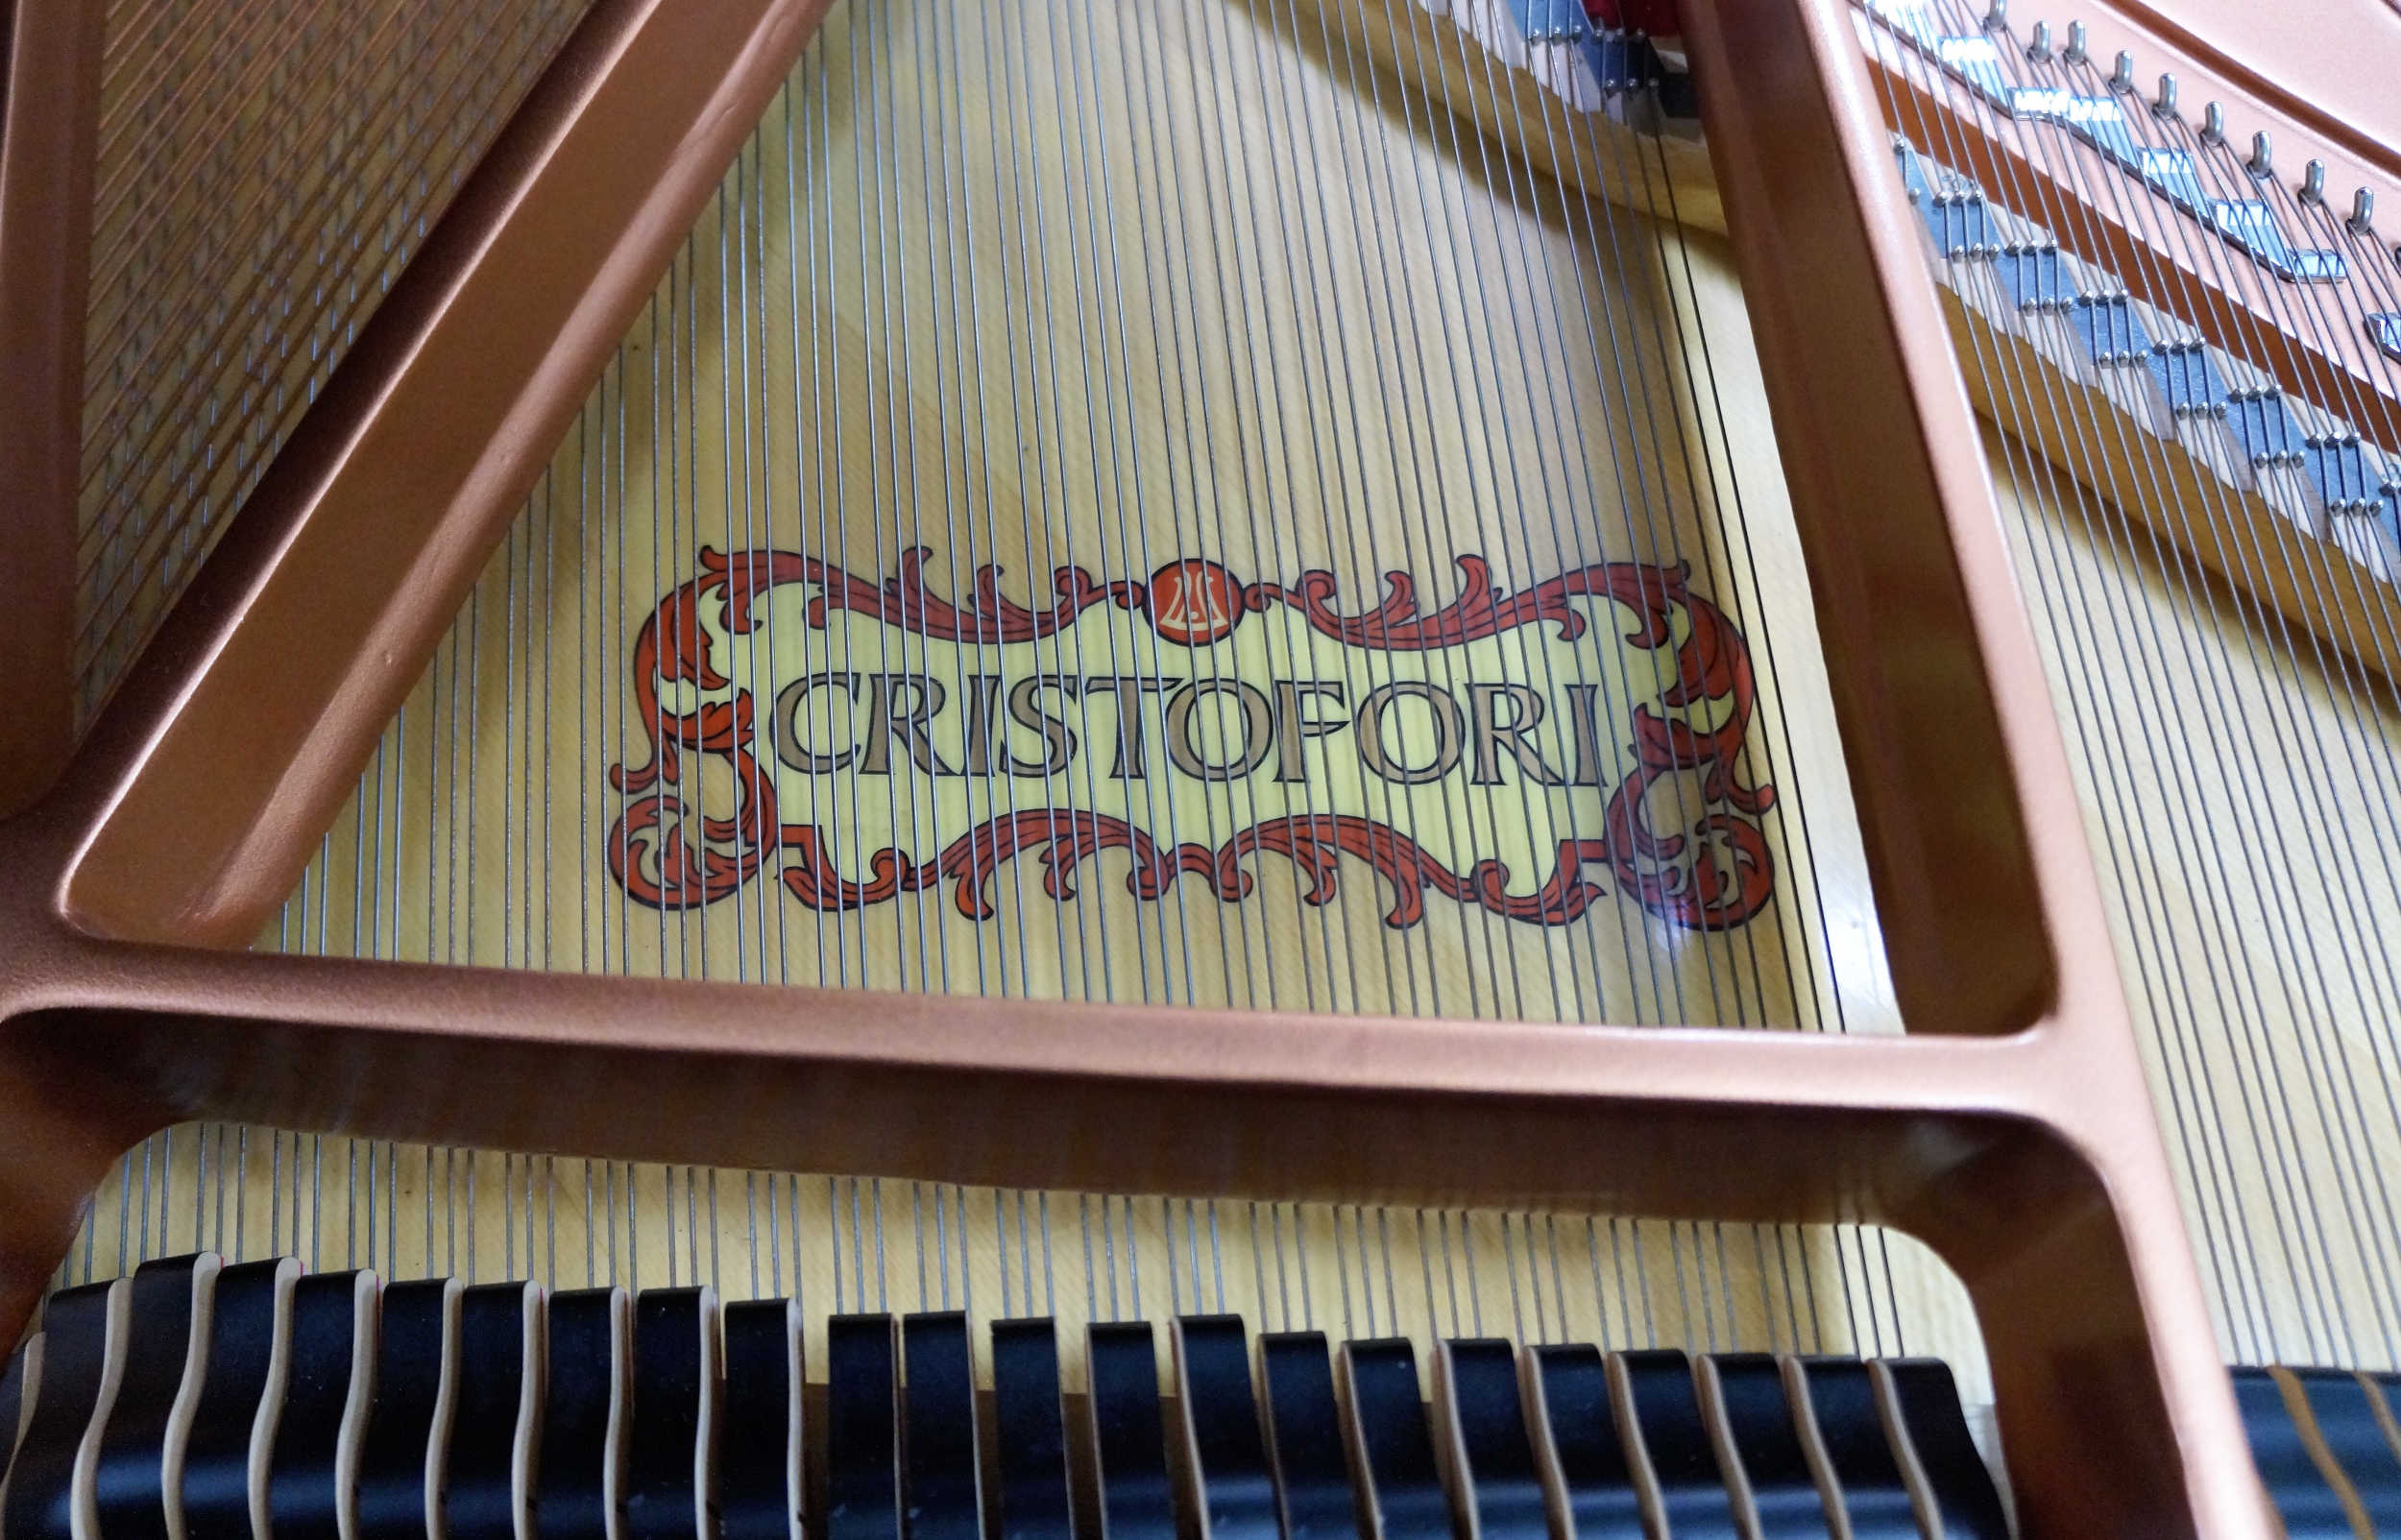 Cristofori Grand Piano Cherry Mahogany Finish